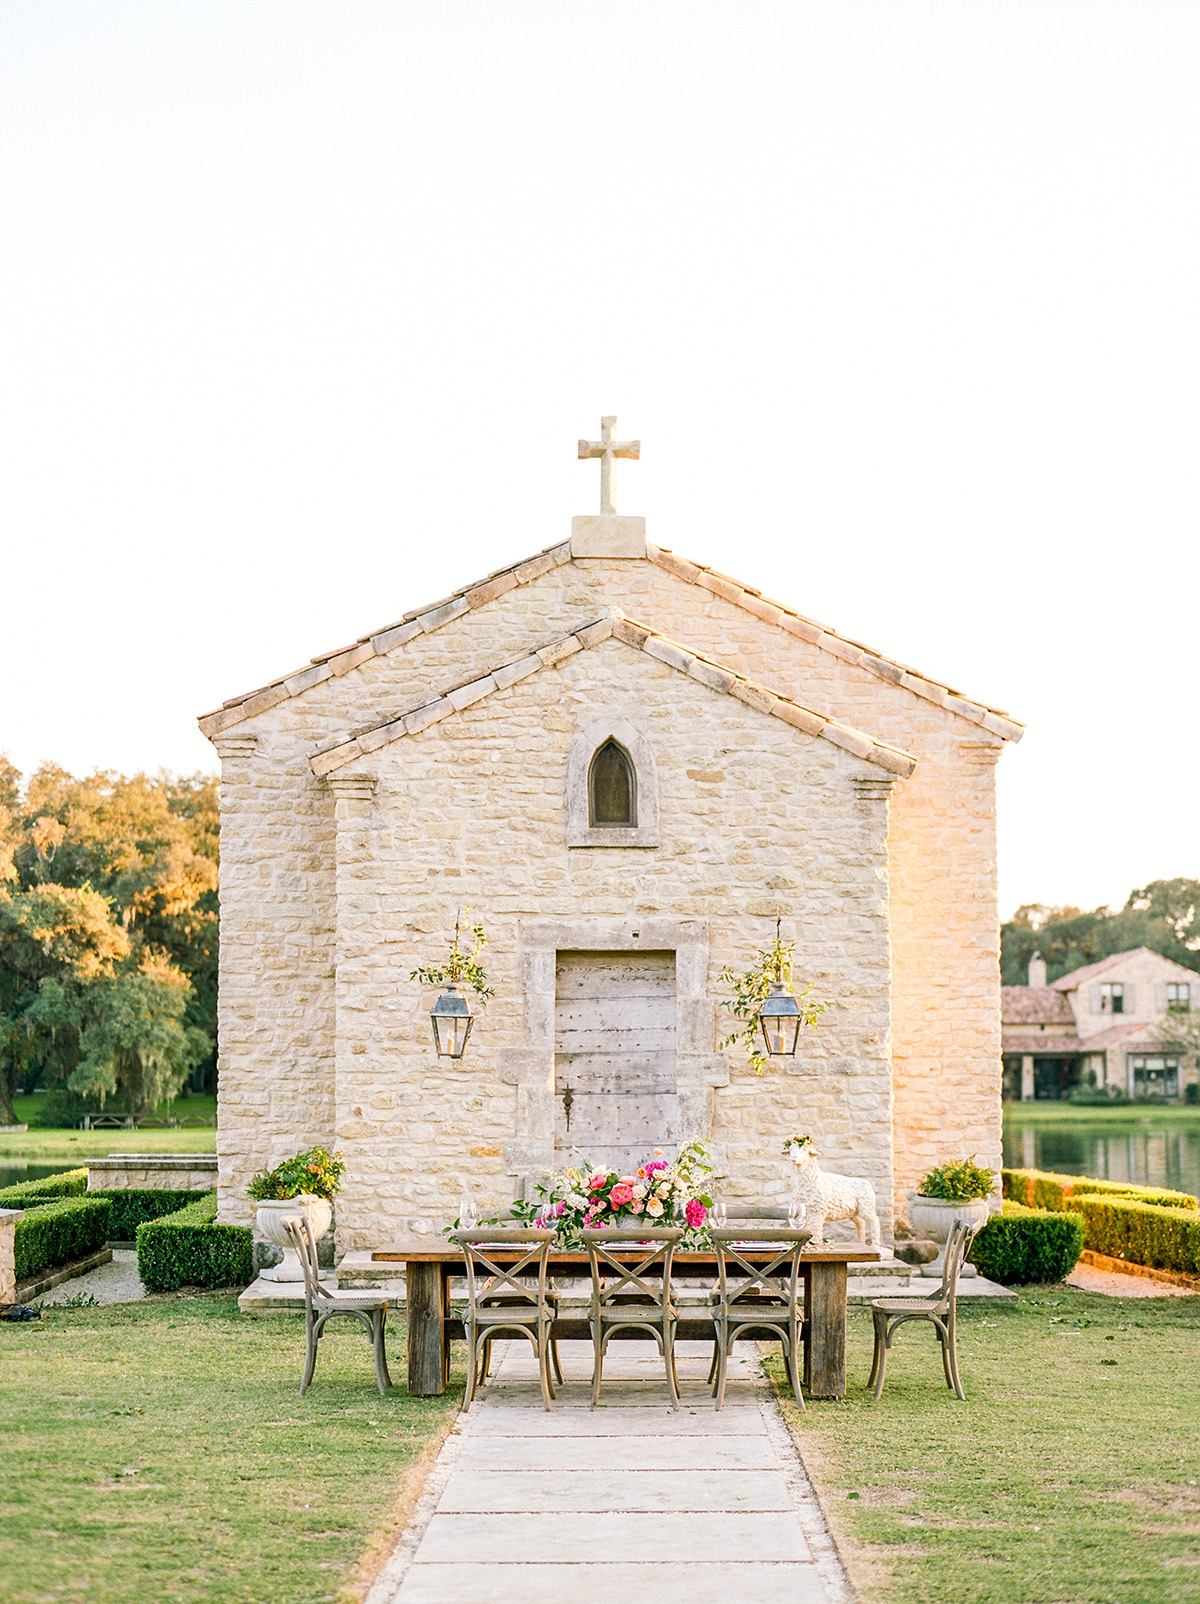 Top wedding chapels